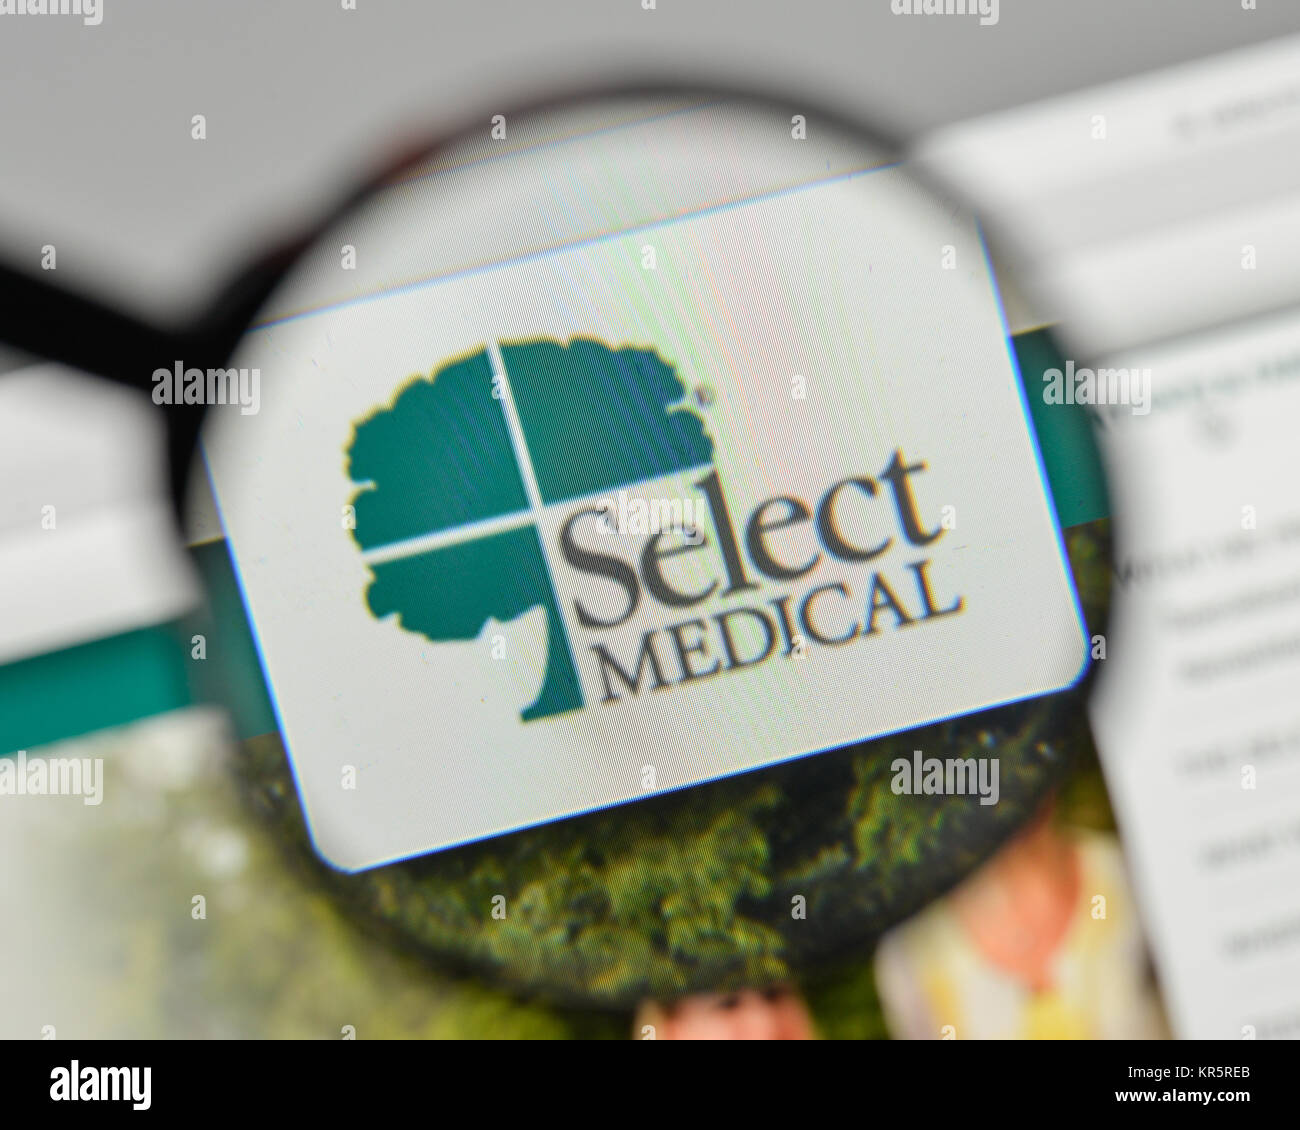 Select Medical Stock Photos Select Medical Stock Images Alamy